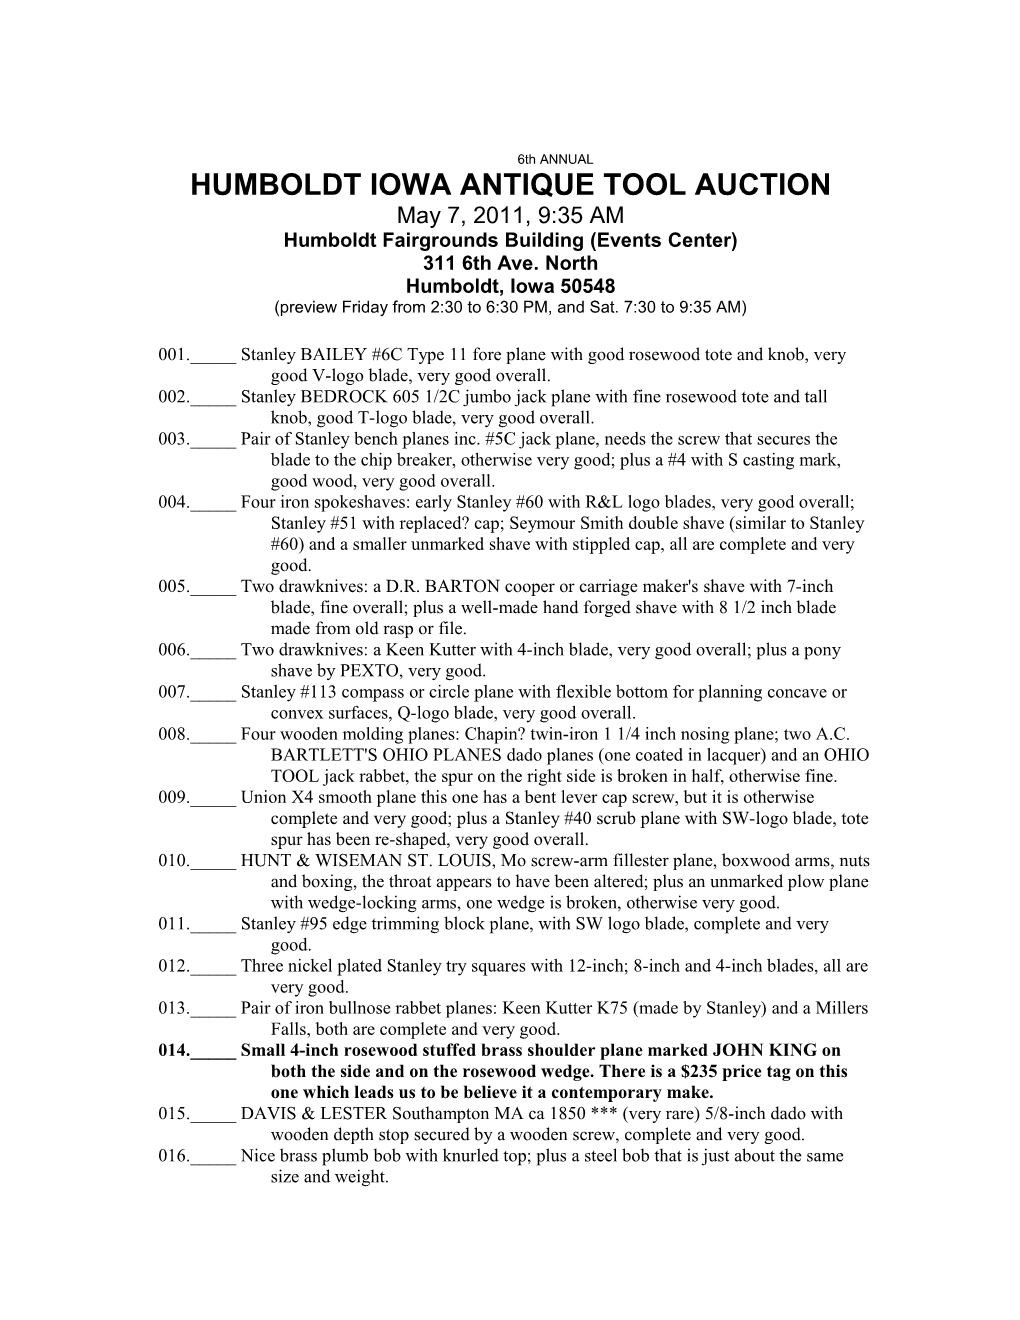 Humboldt Iowa Antique Tool Auction